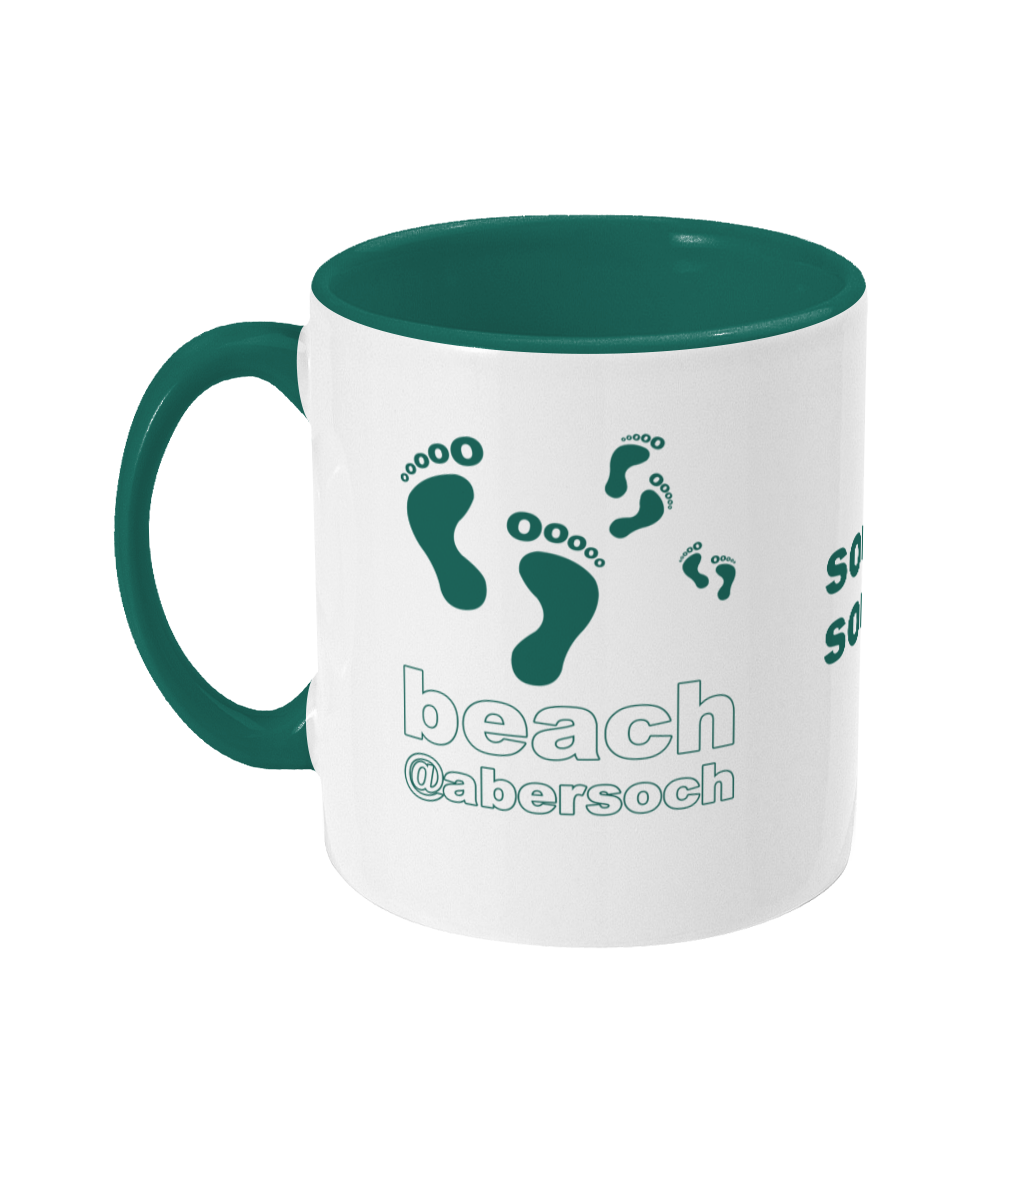 green sochsoch abersoch beach Two Toned Mug